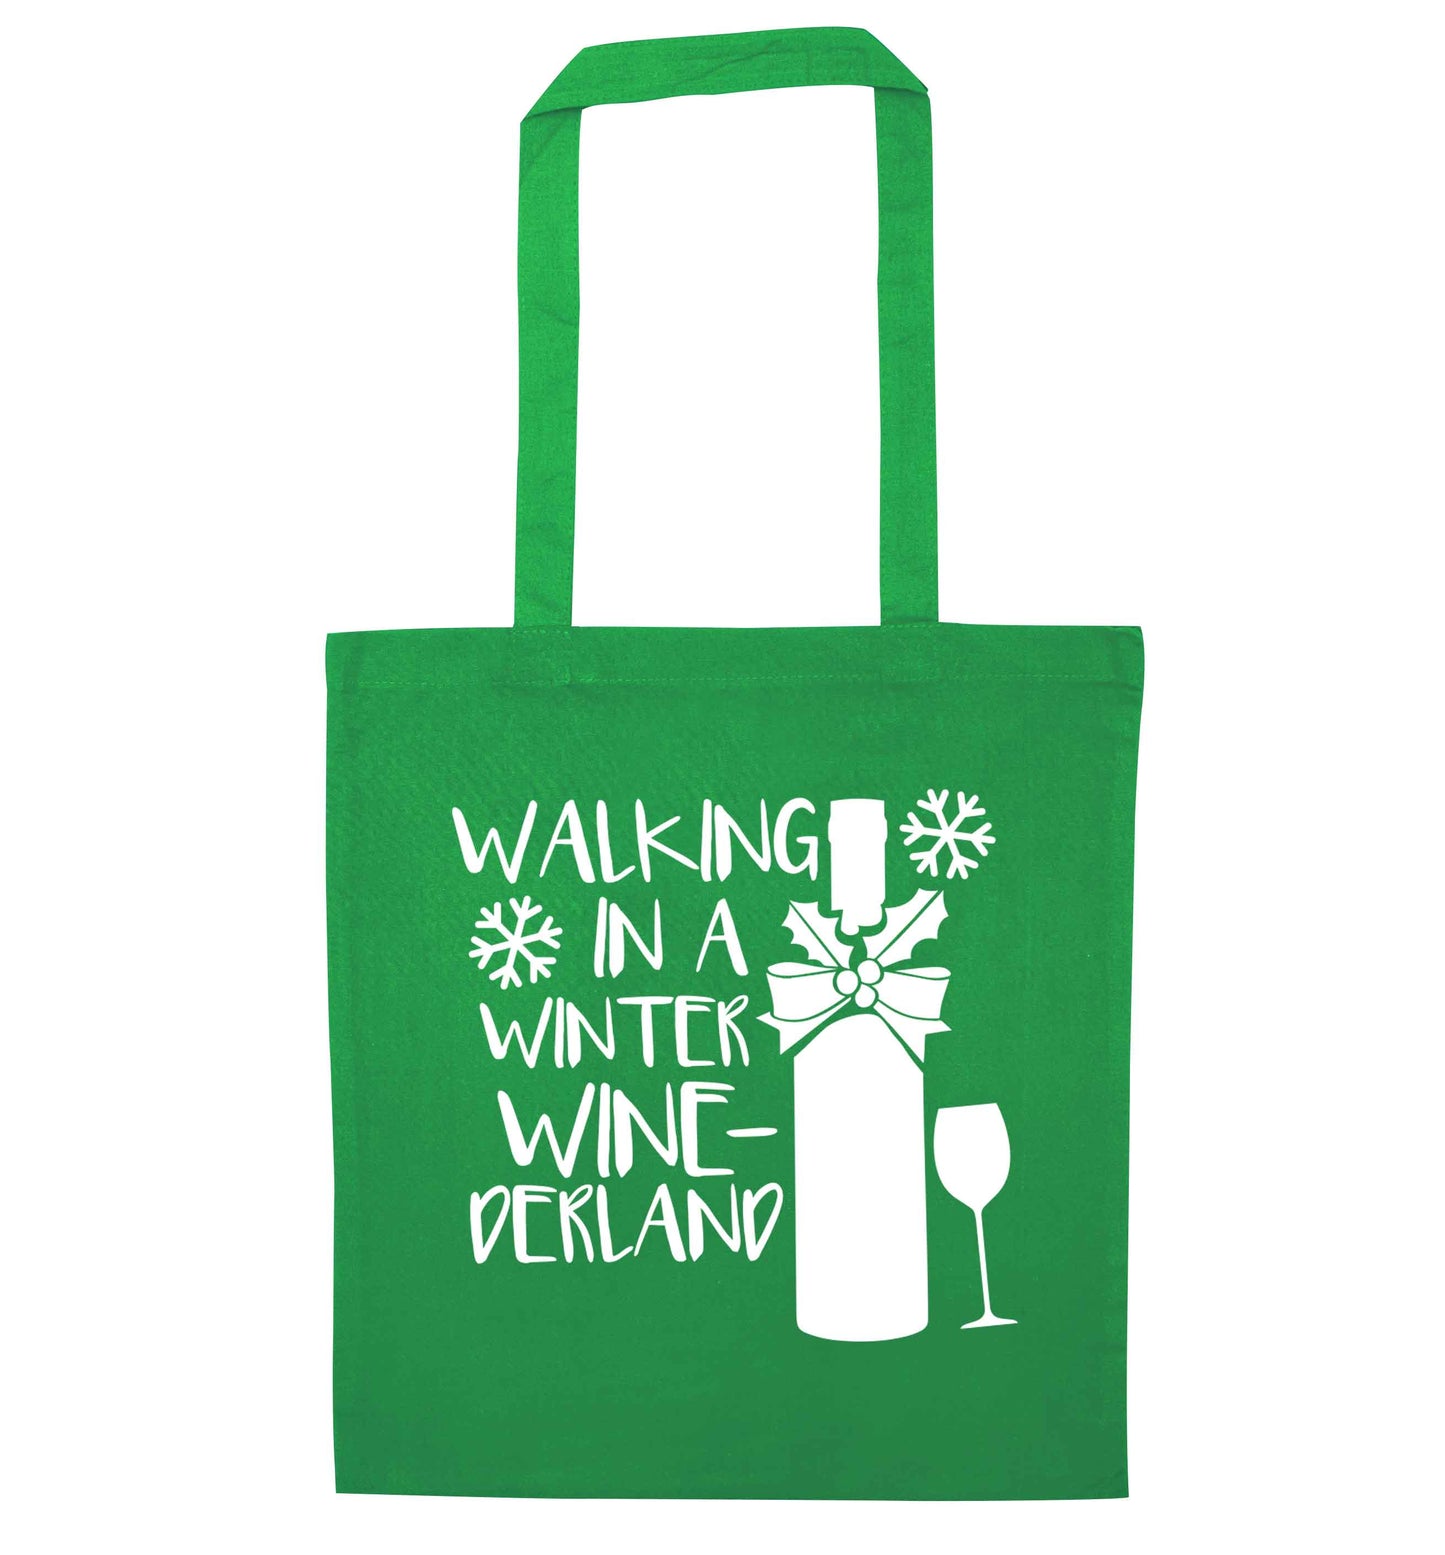 Walking in a wine-derwonderland green tote bag